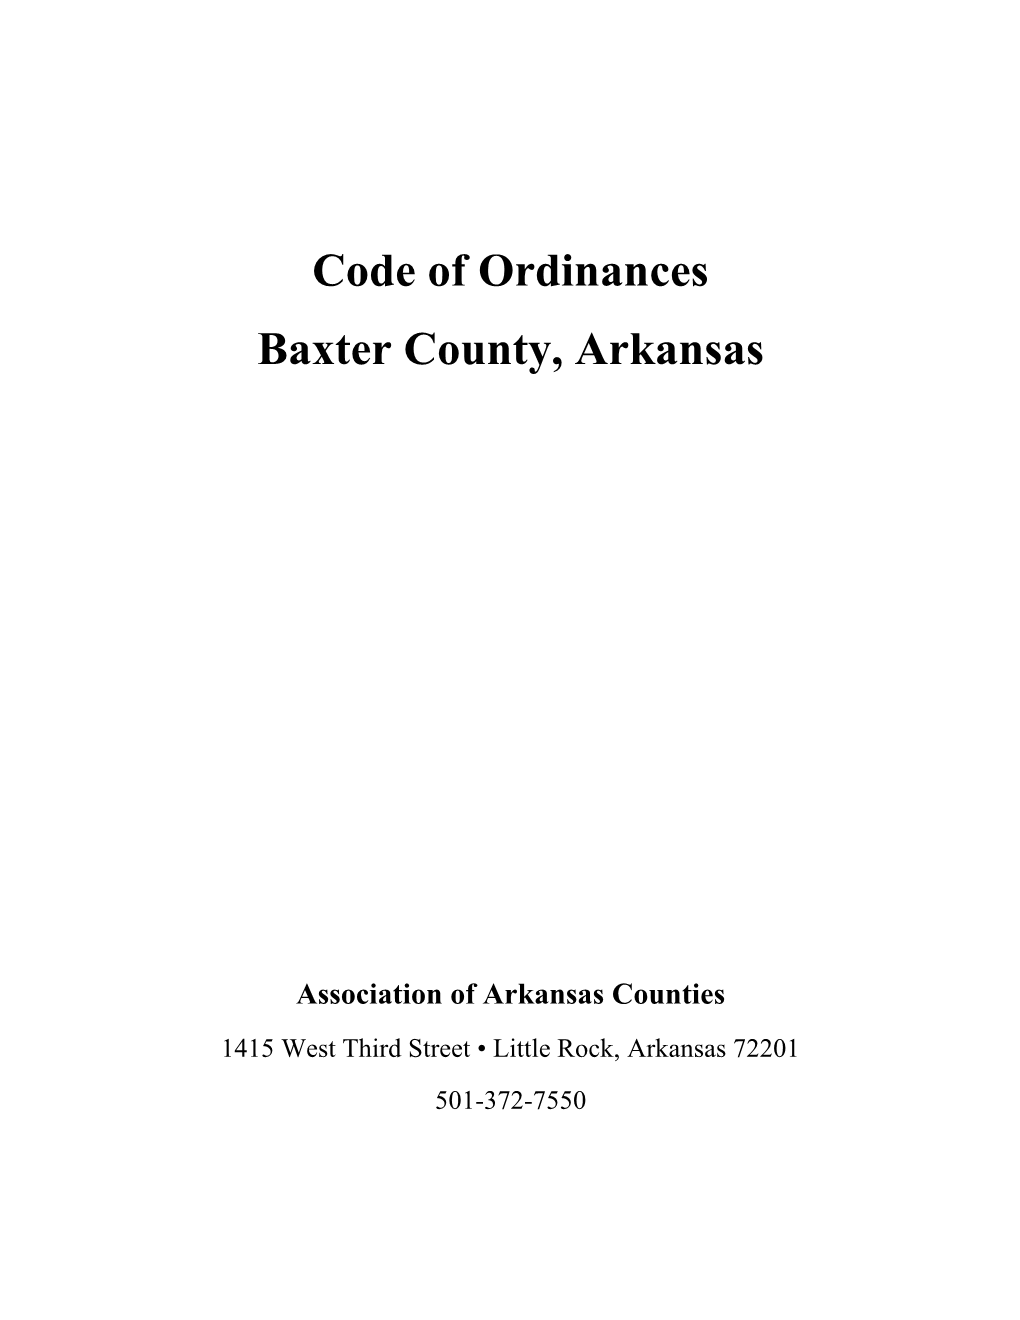 Code of Ordinances Baxter County, Arkansas